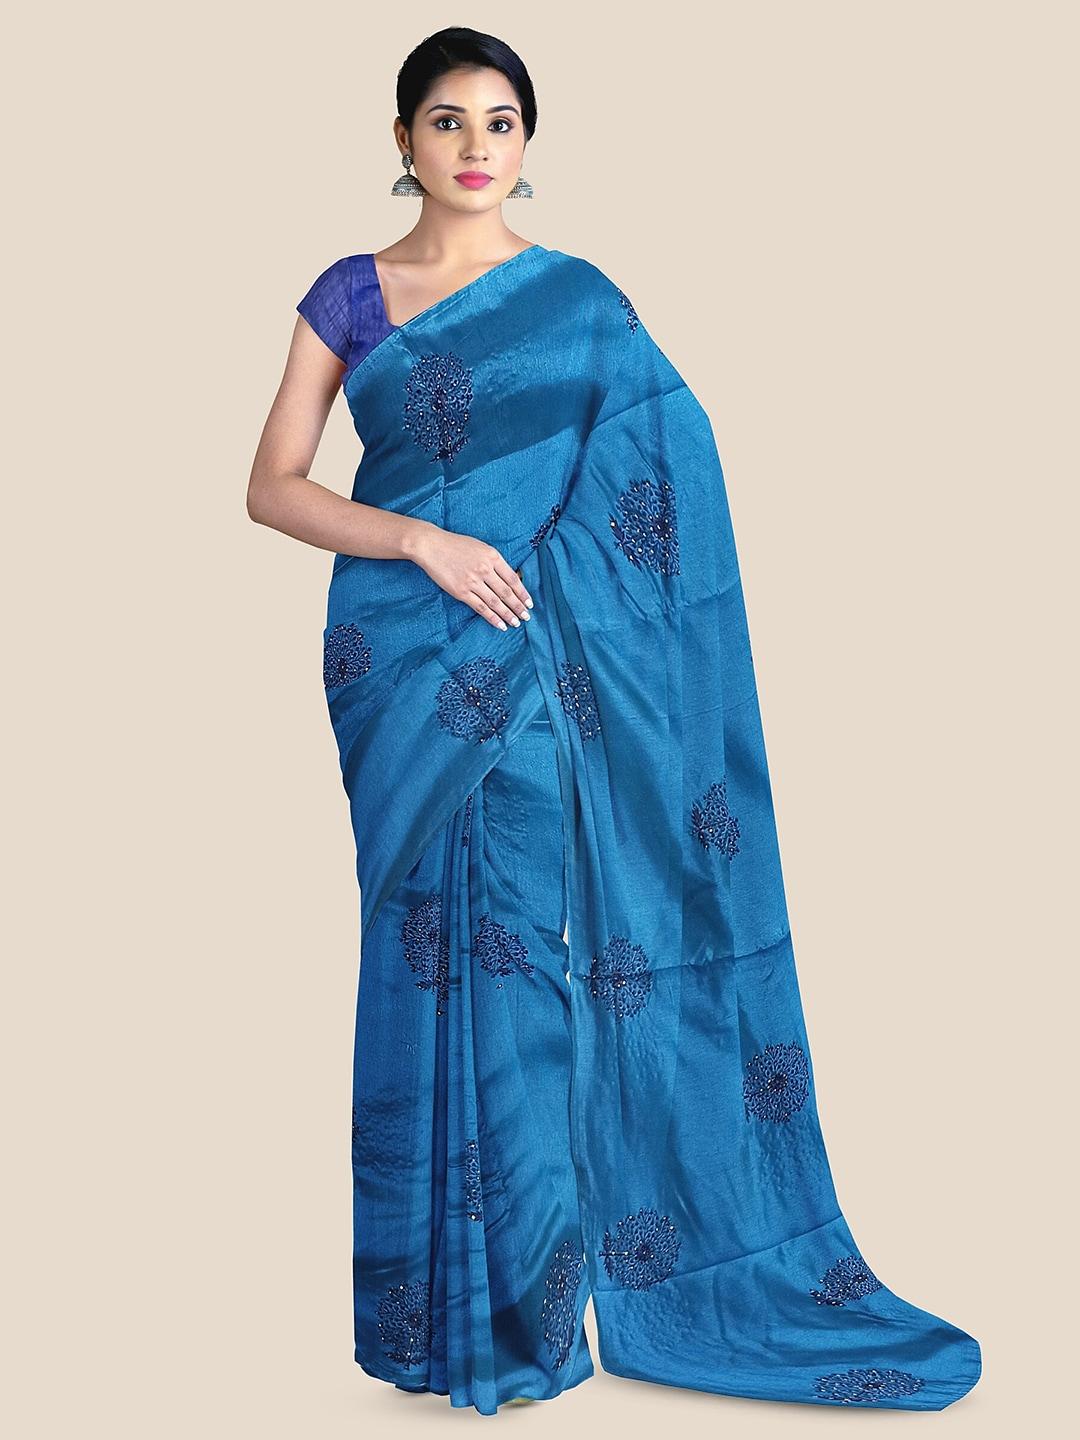 The Chennai Silks Embellished Embroidered Saree